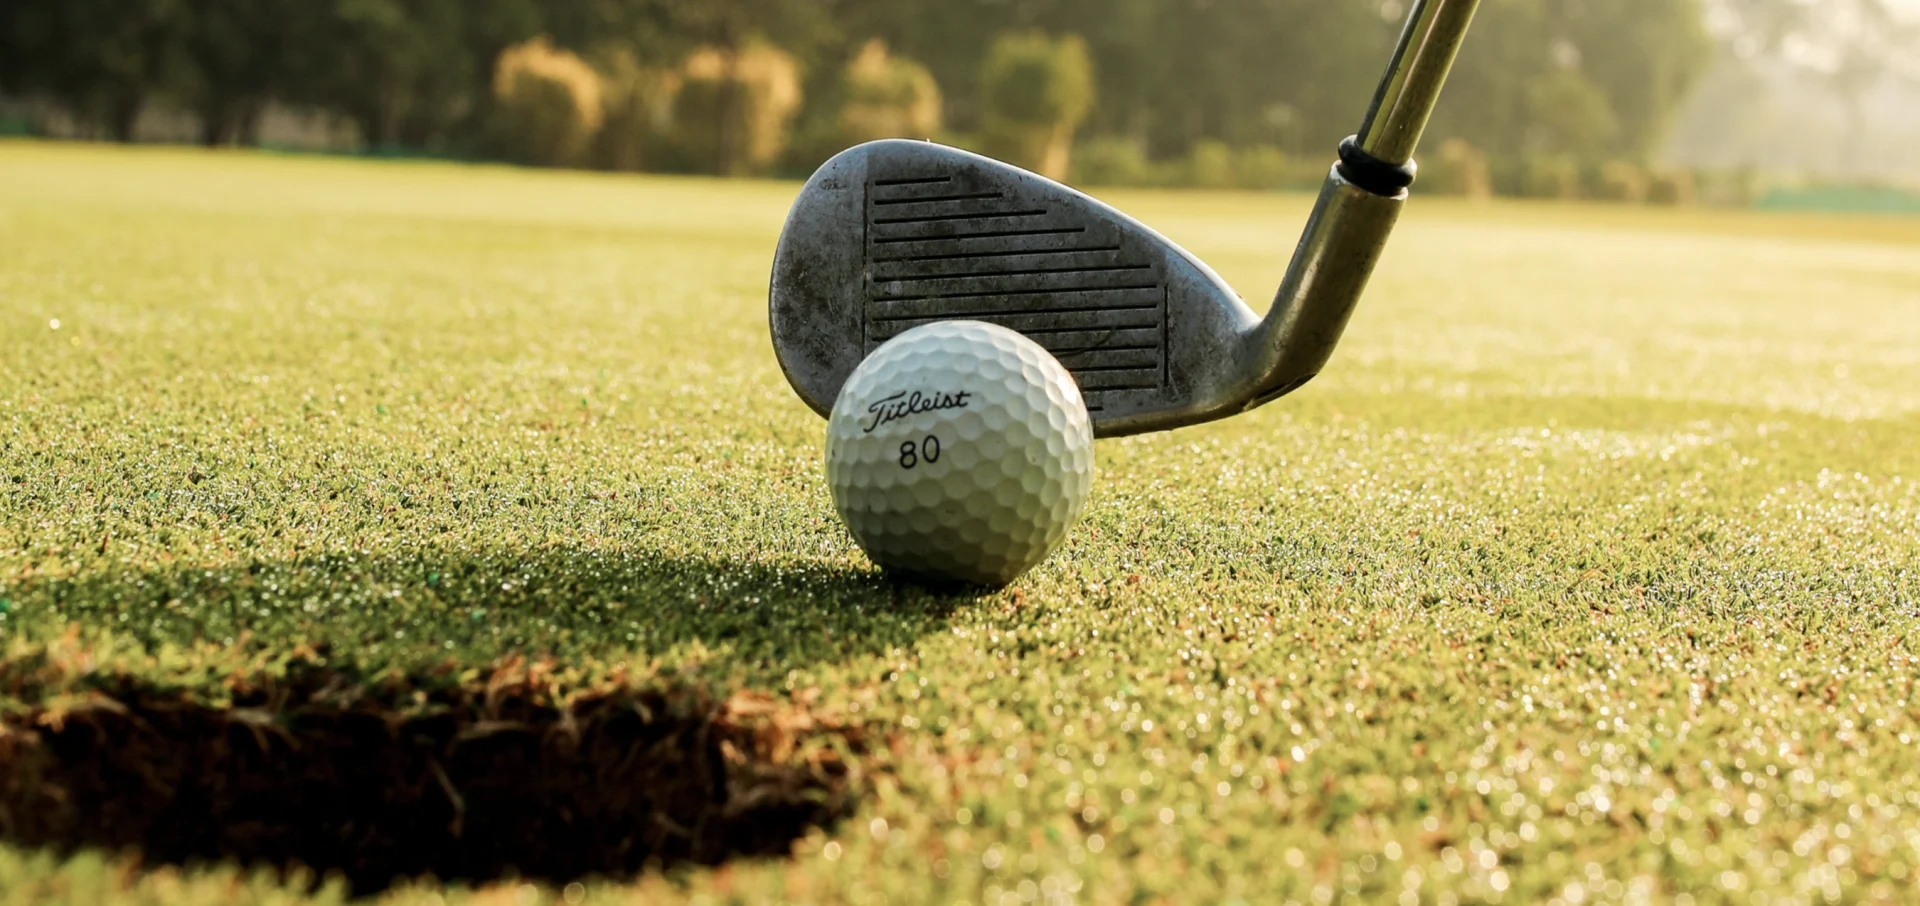 Pexels/Nadim Shaikh: Golf. Link: https://www.pexels.com/photo/golf-club-hitting-ball-on-field-7758348/